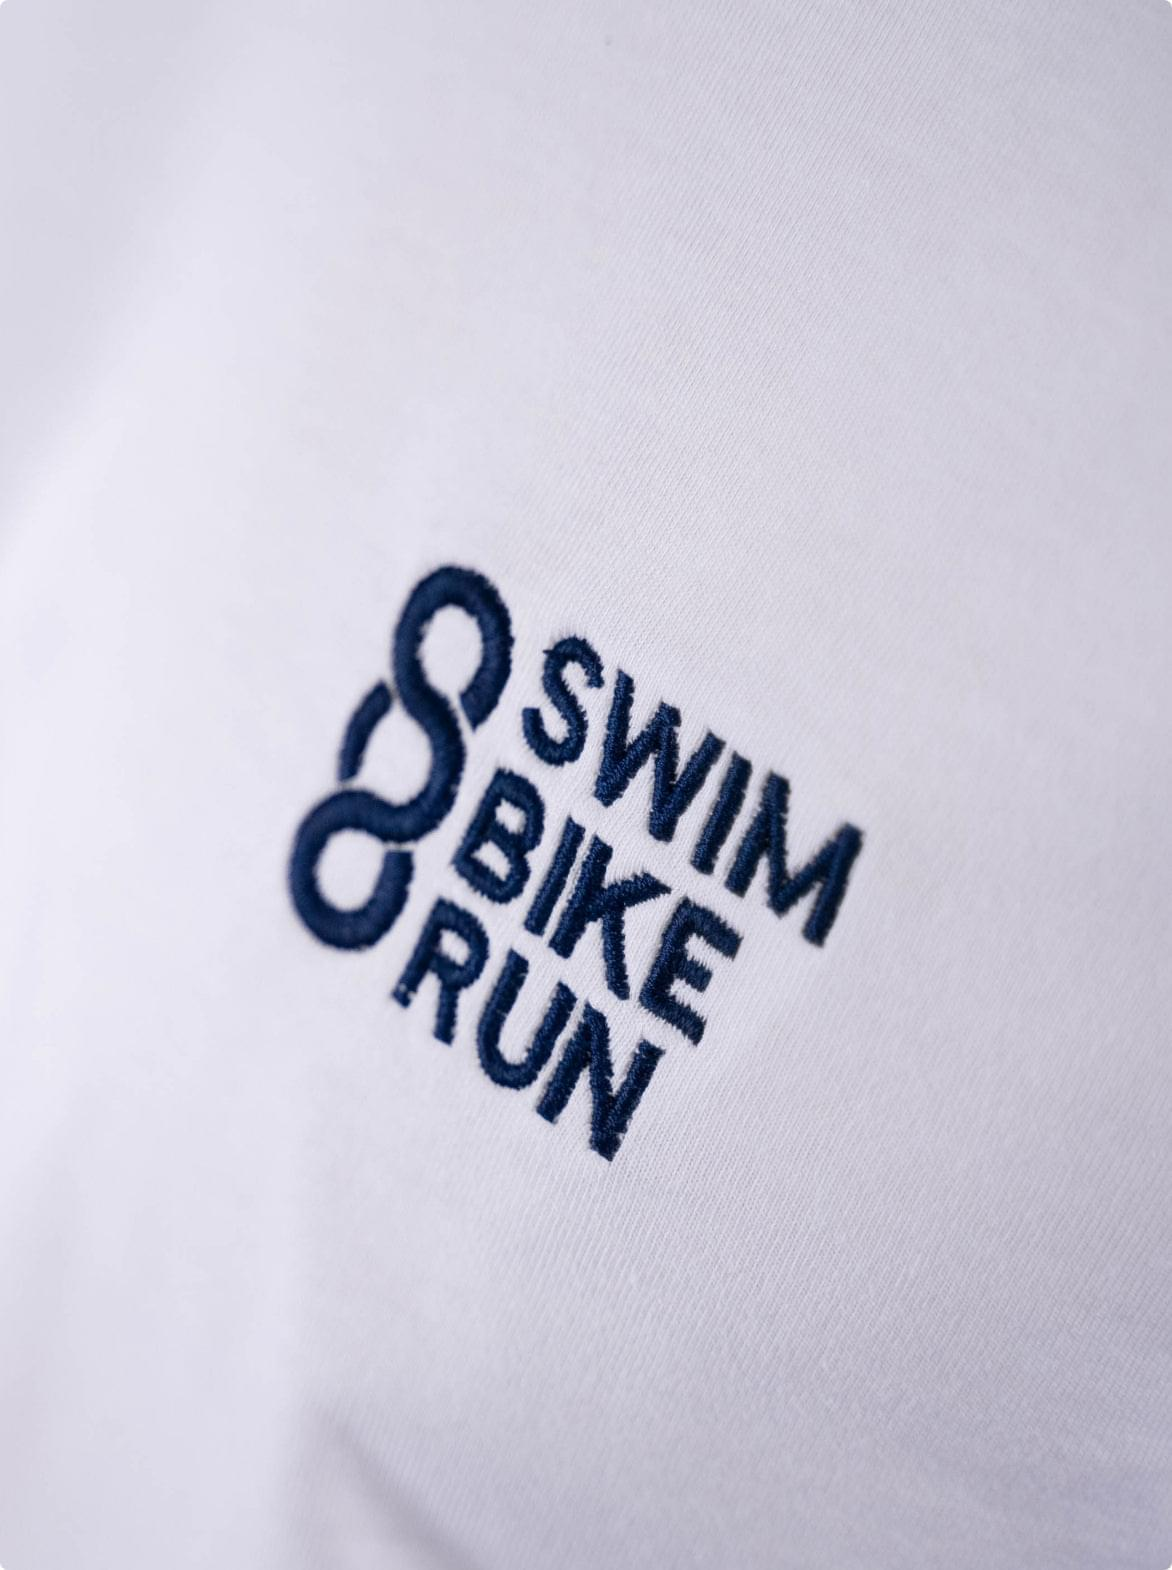 Women's Cotton T-shirt Made in France and Organic — Swim Bike Run